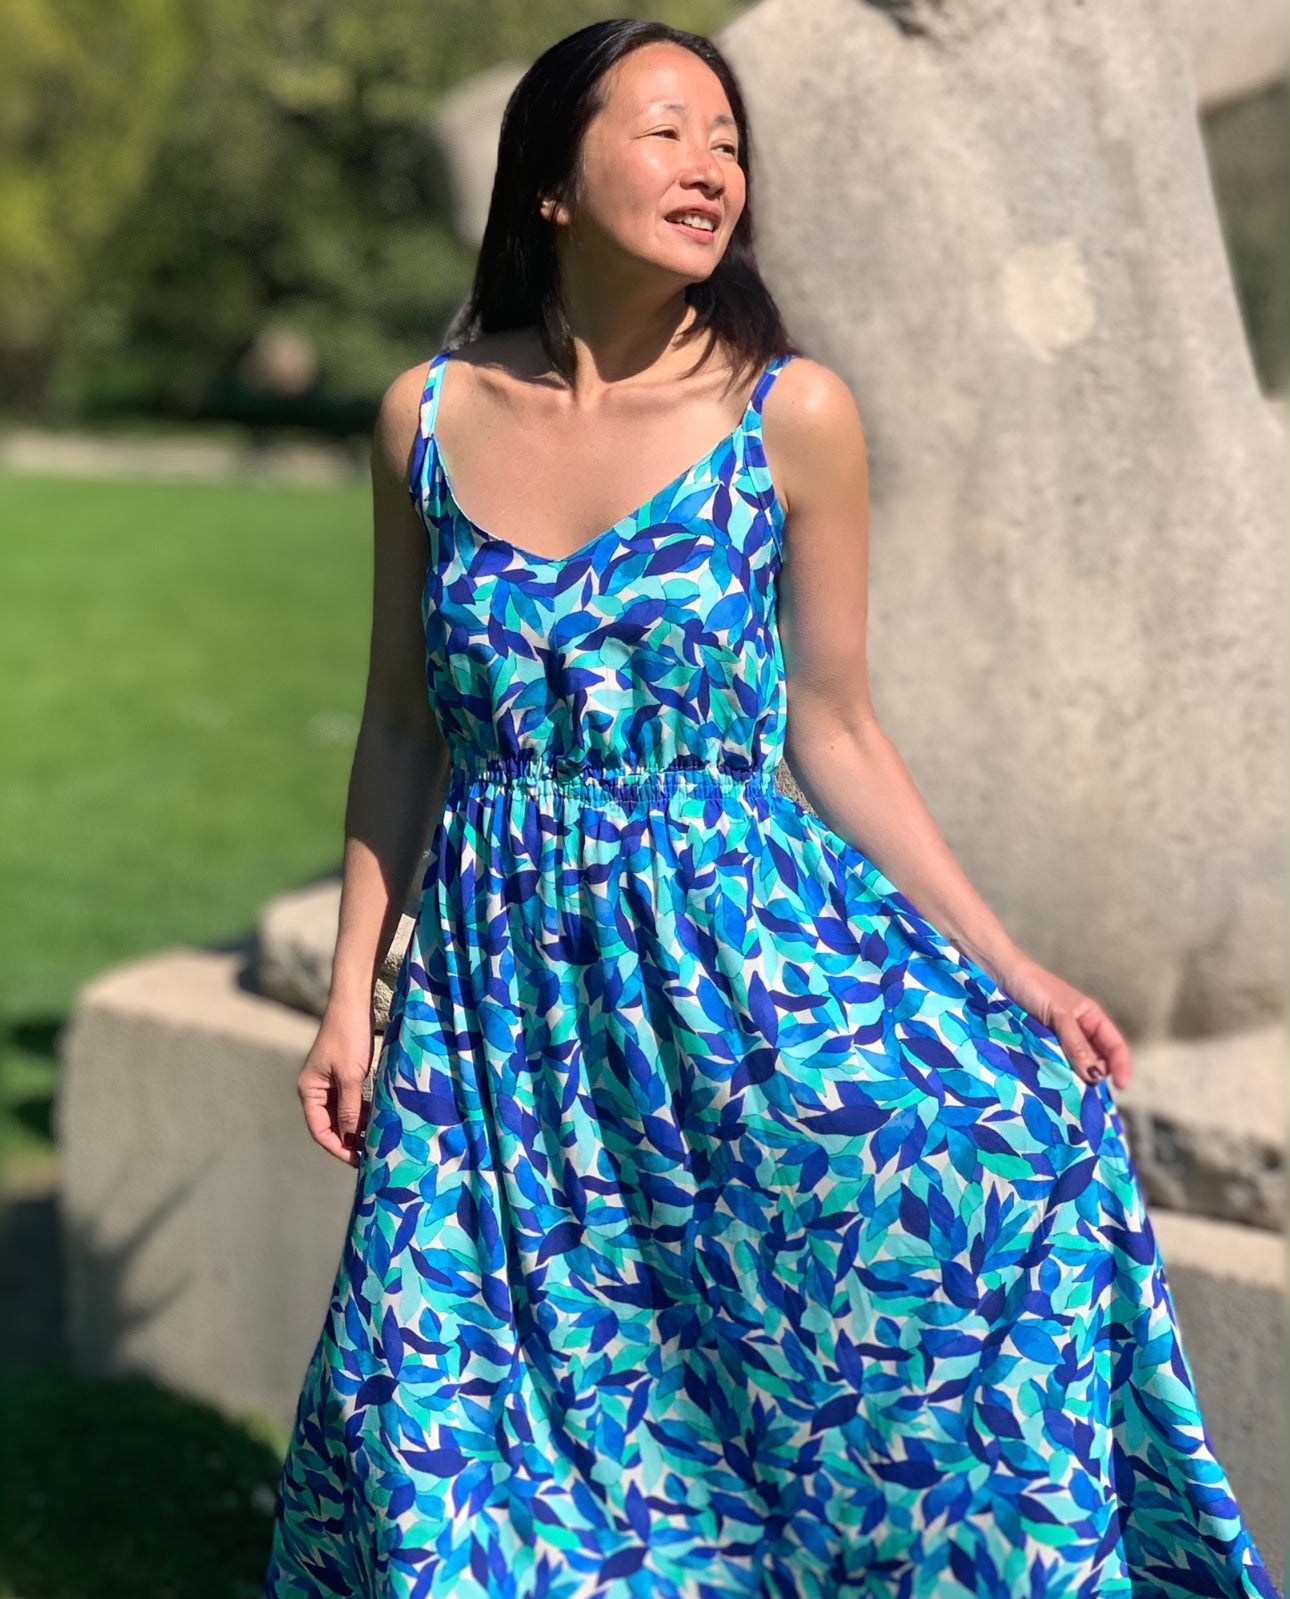 My Dress Made - Azurite Viscose Crepe Fabric